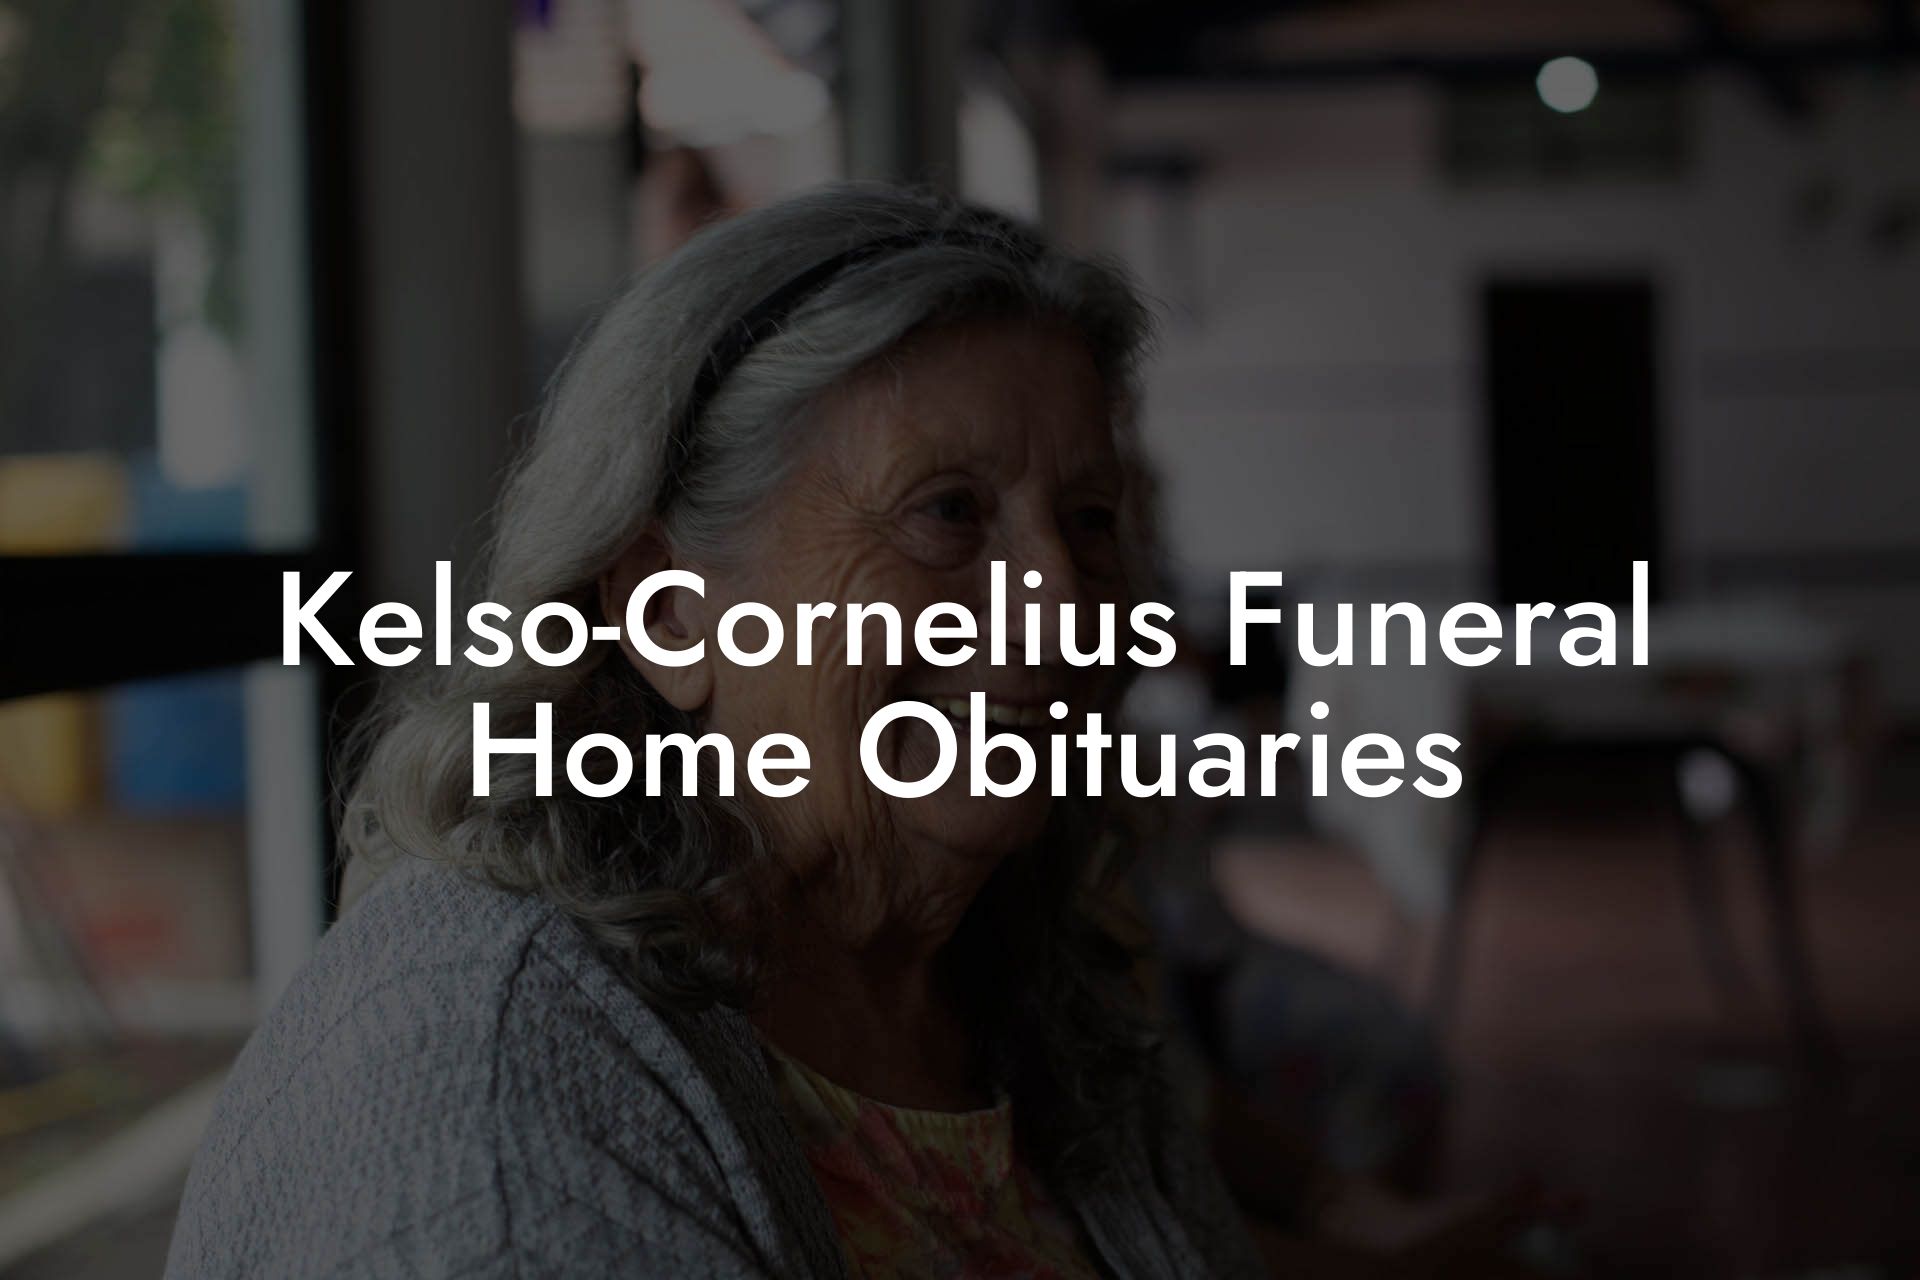 Kelso-Cornelius Funeral Home Obituaries